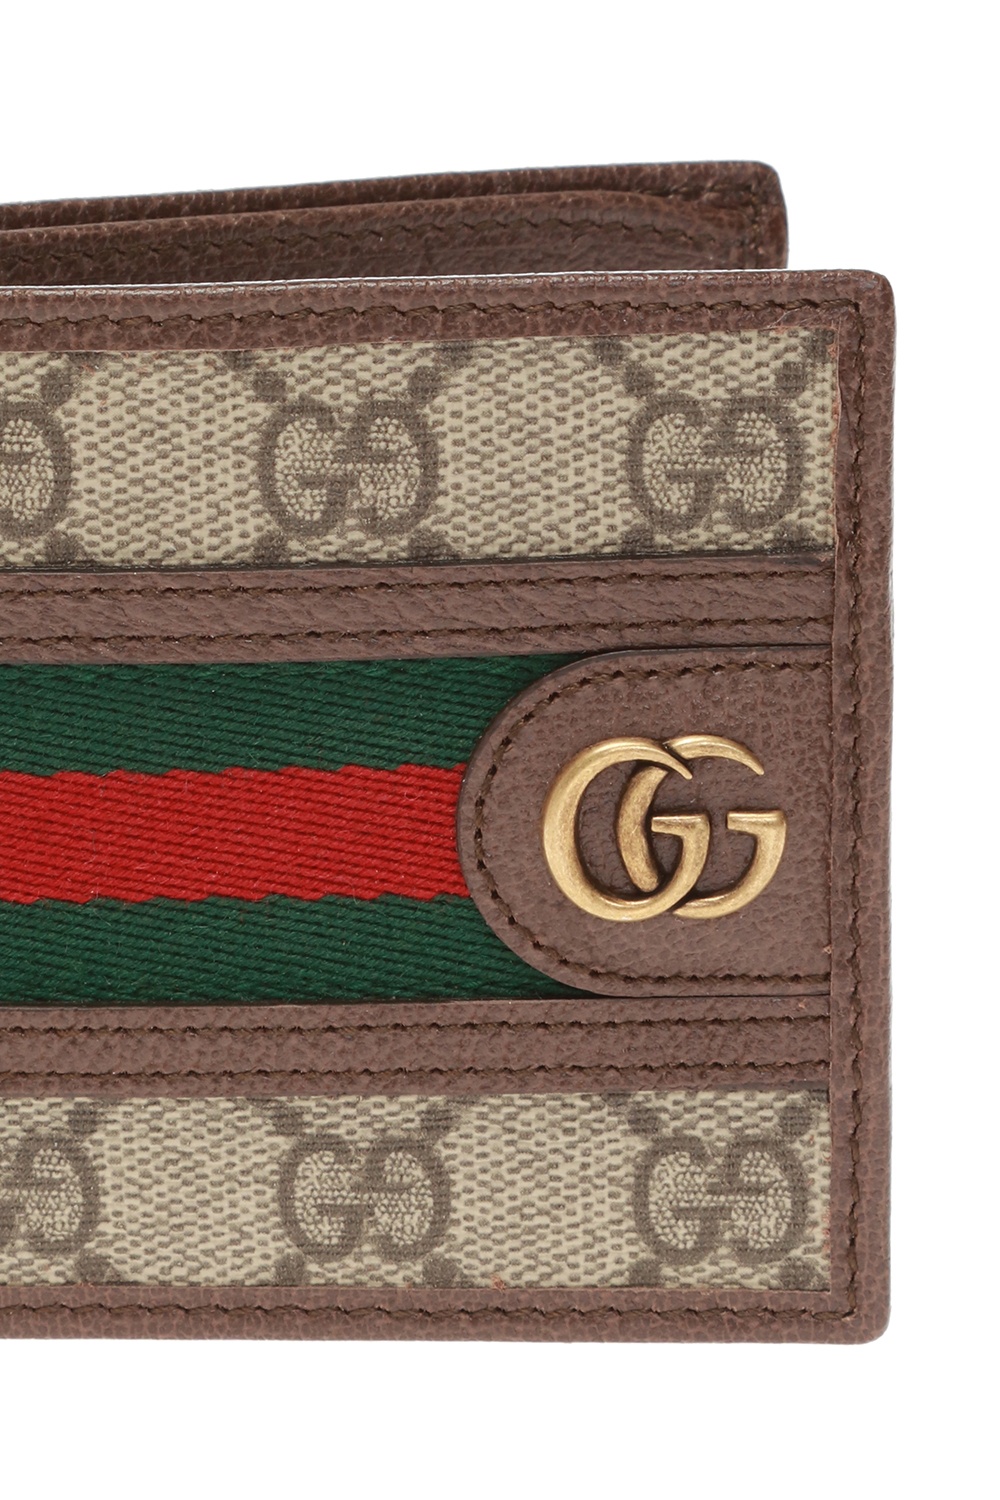 Gucci Logo wallet